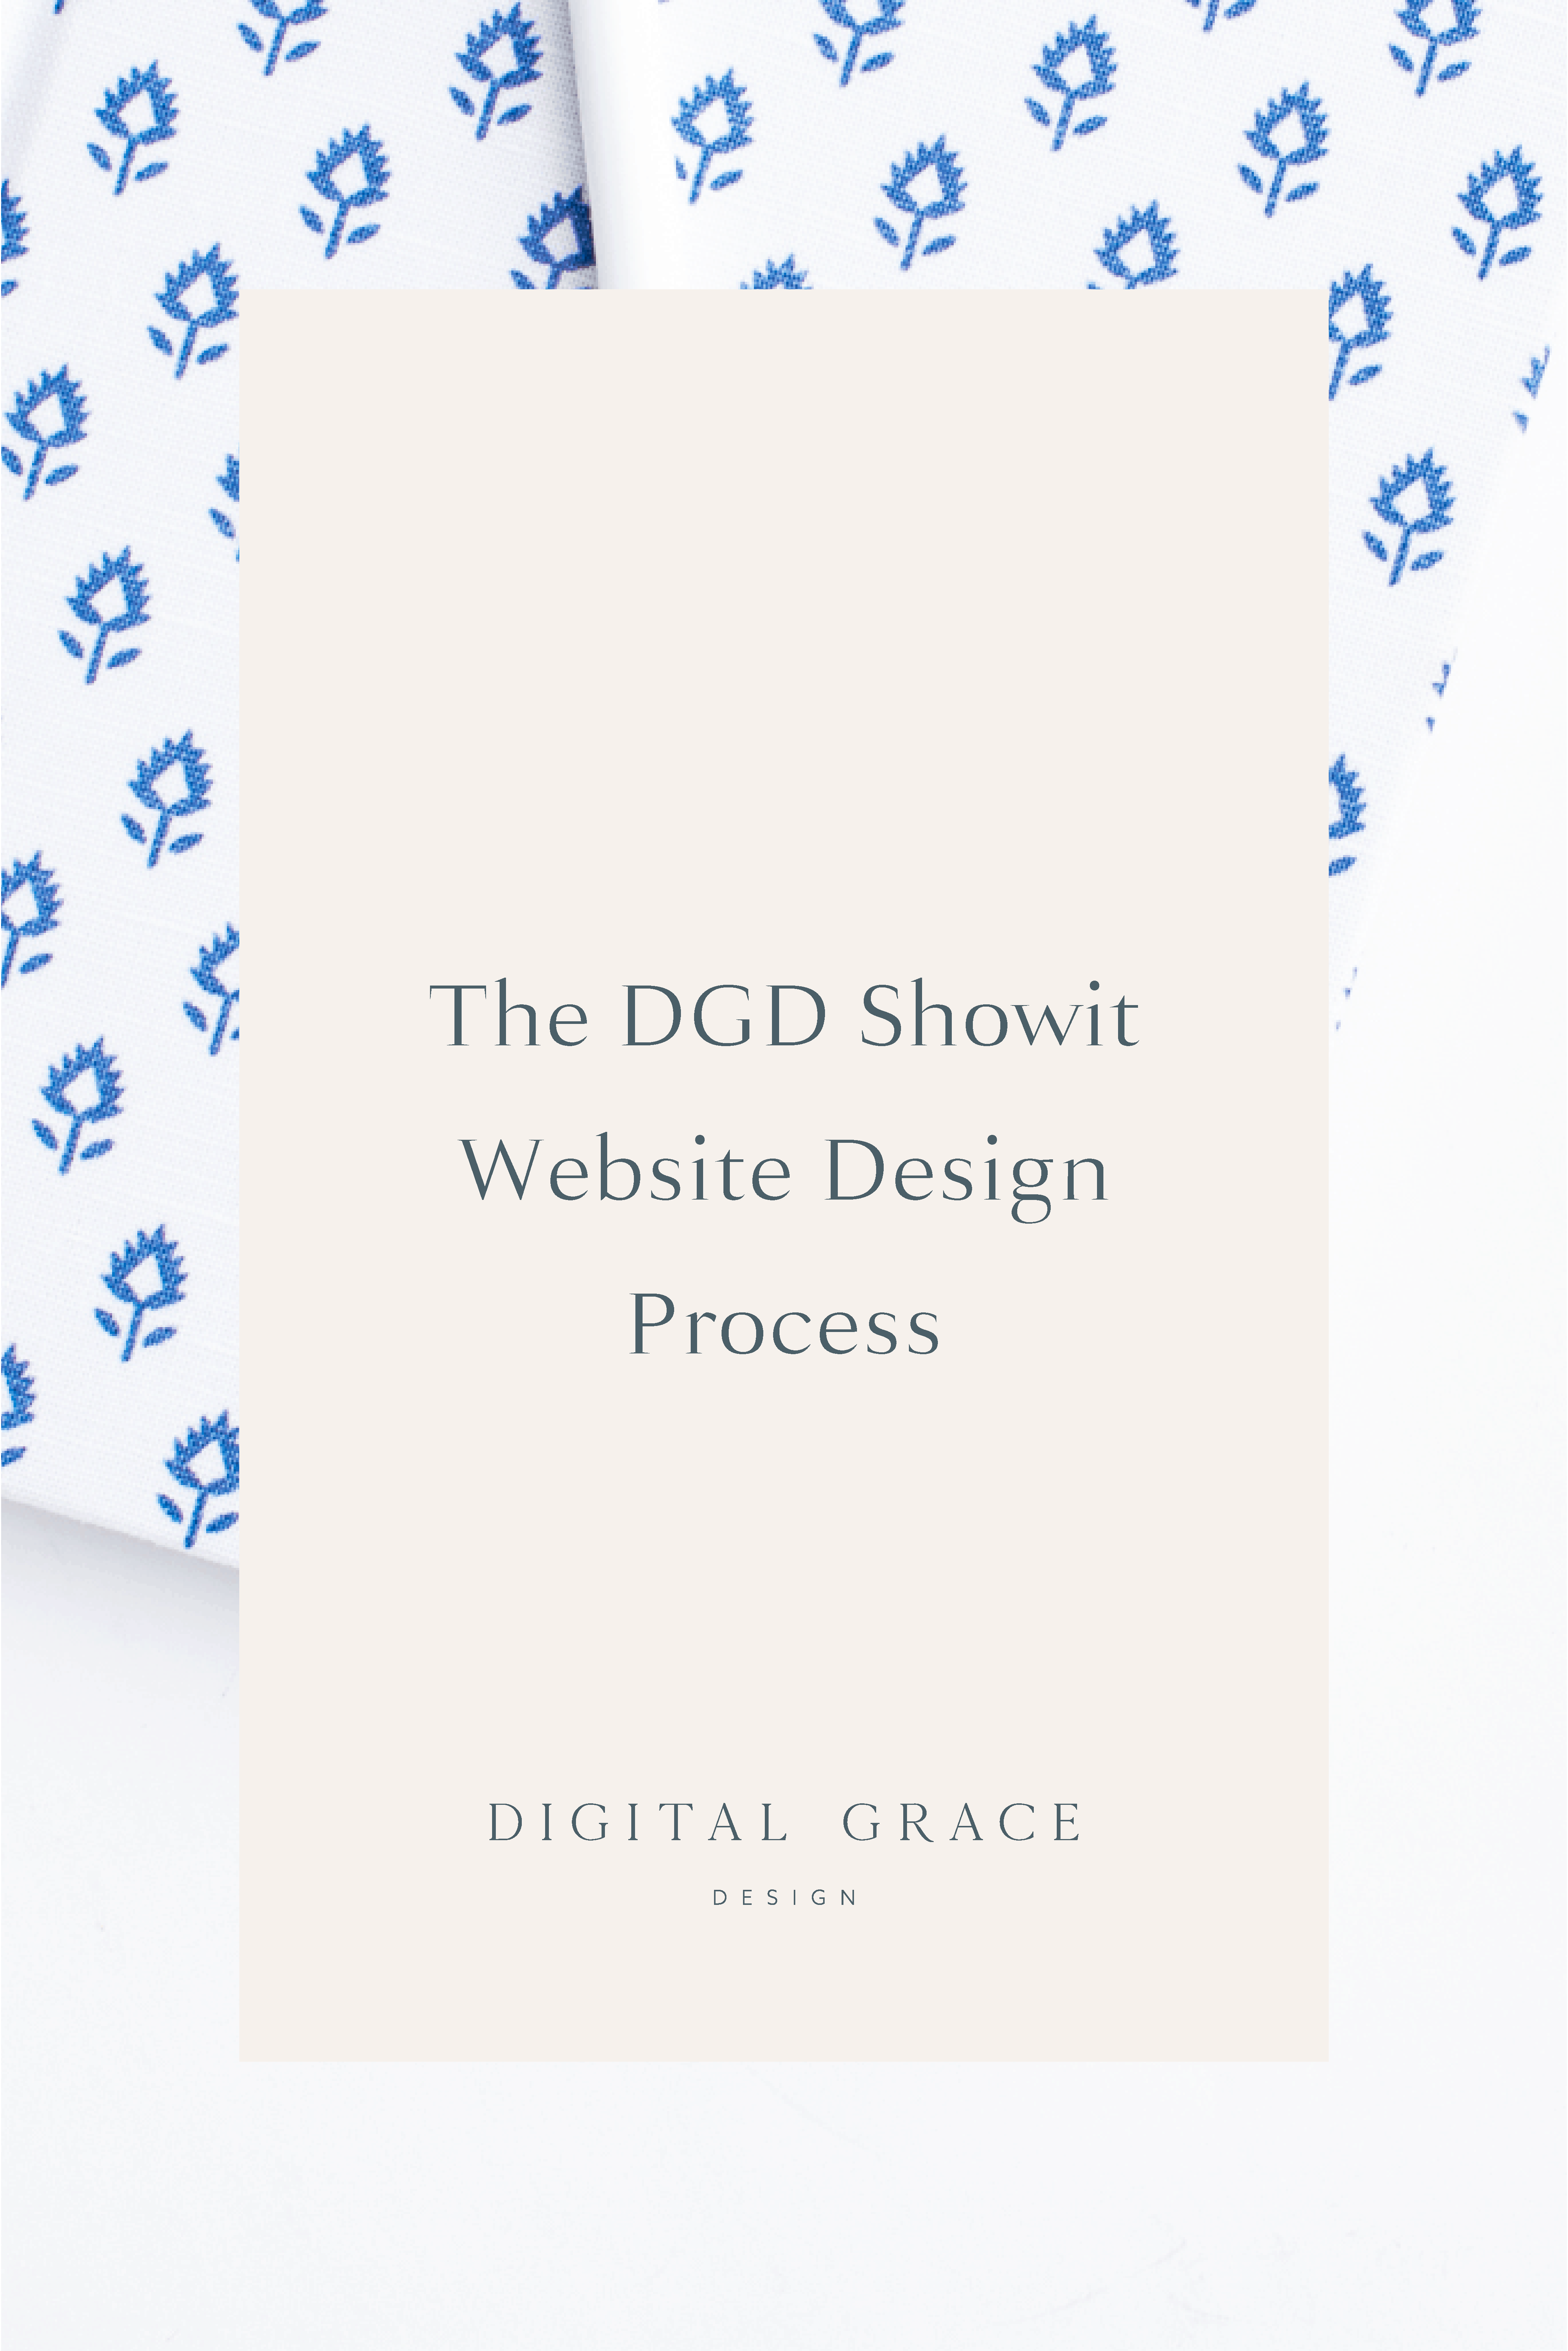 The Digital Grace Design Showit Website Process